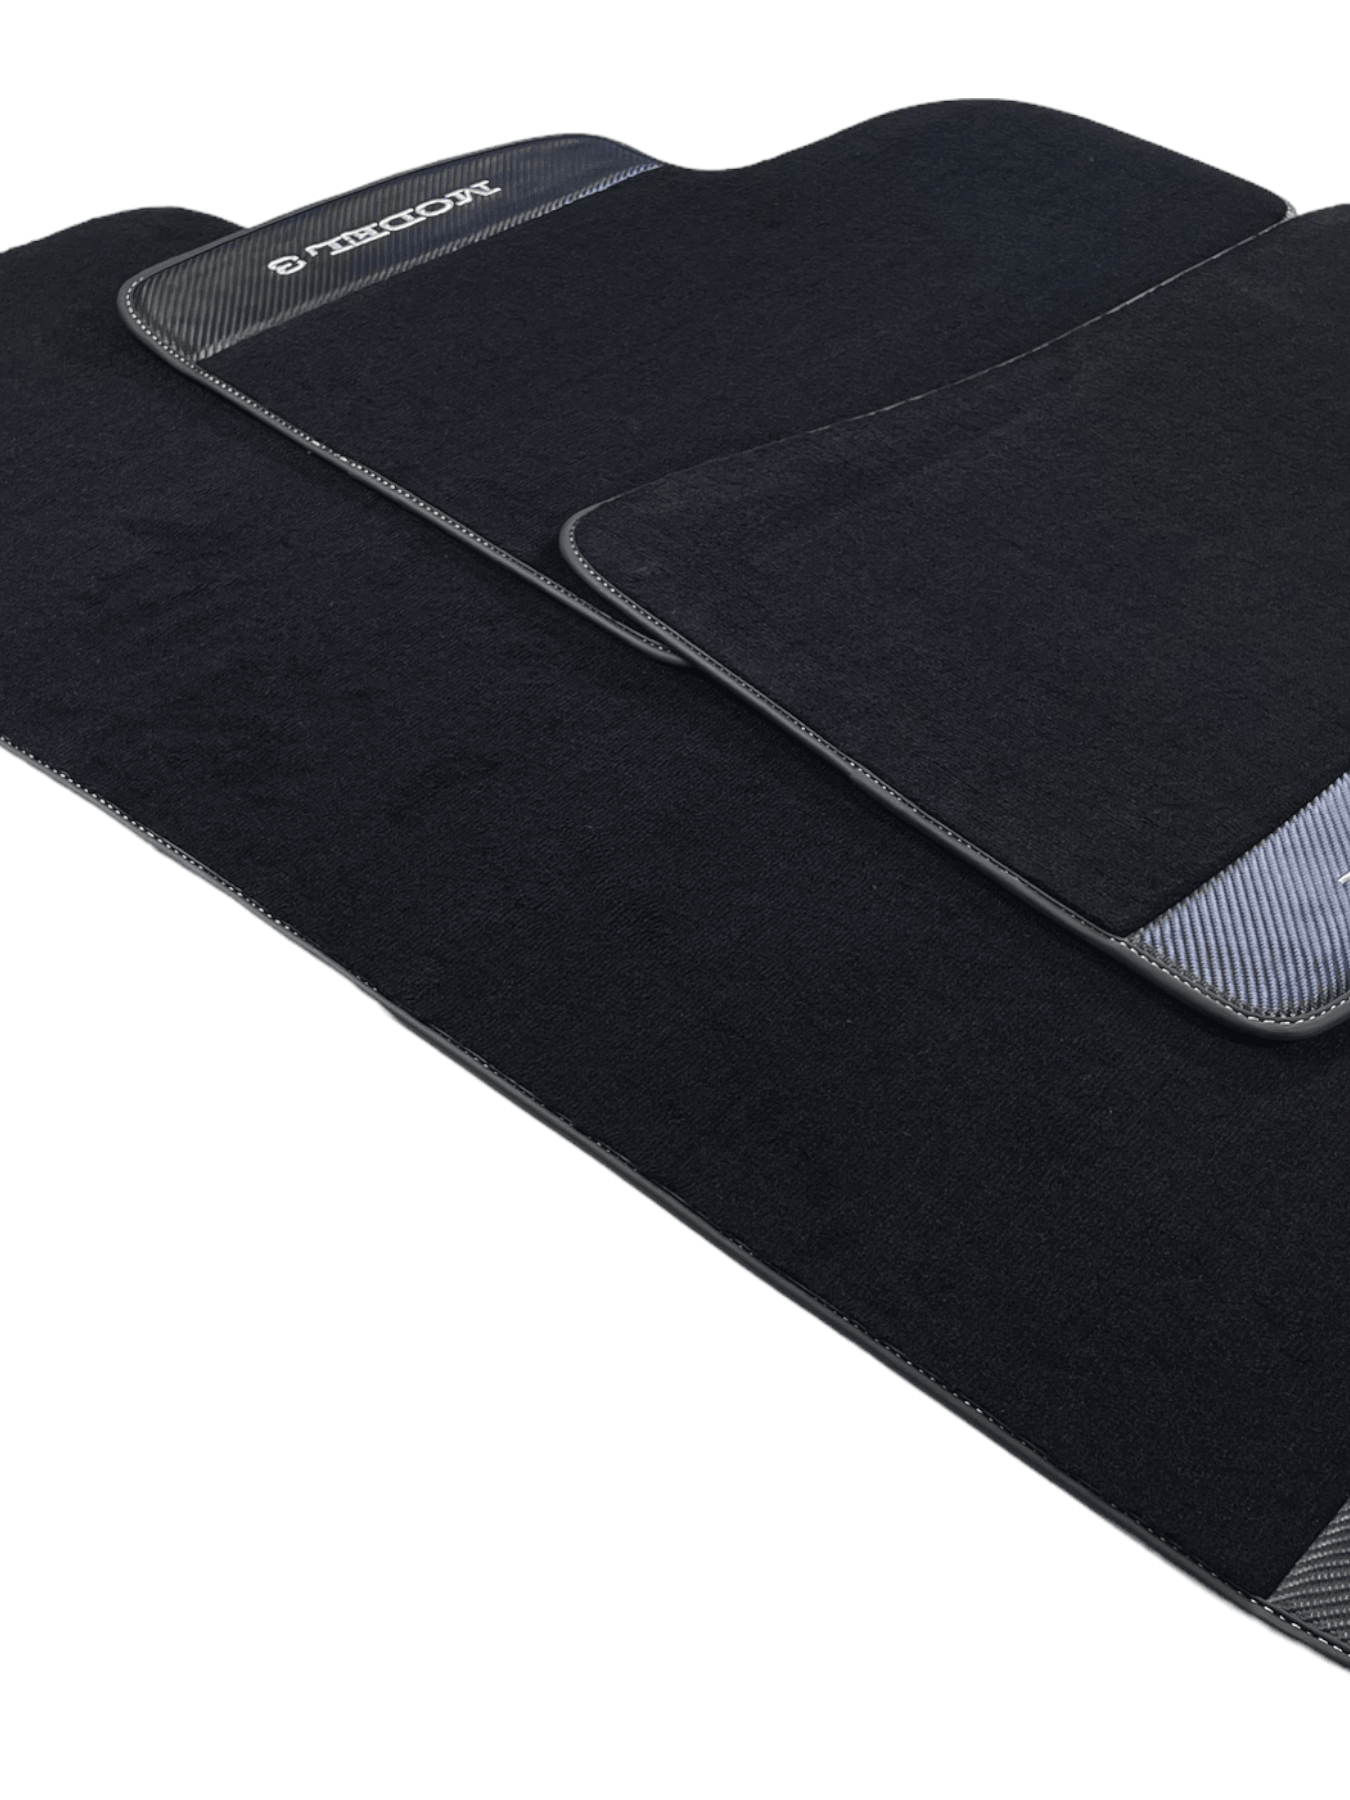 Black Floor Mats For Tesla Model 3 With Carbon Fiber Leather - AutoWin